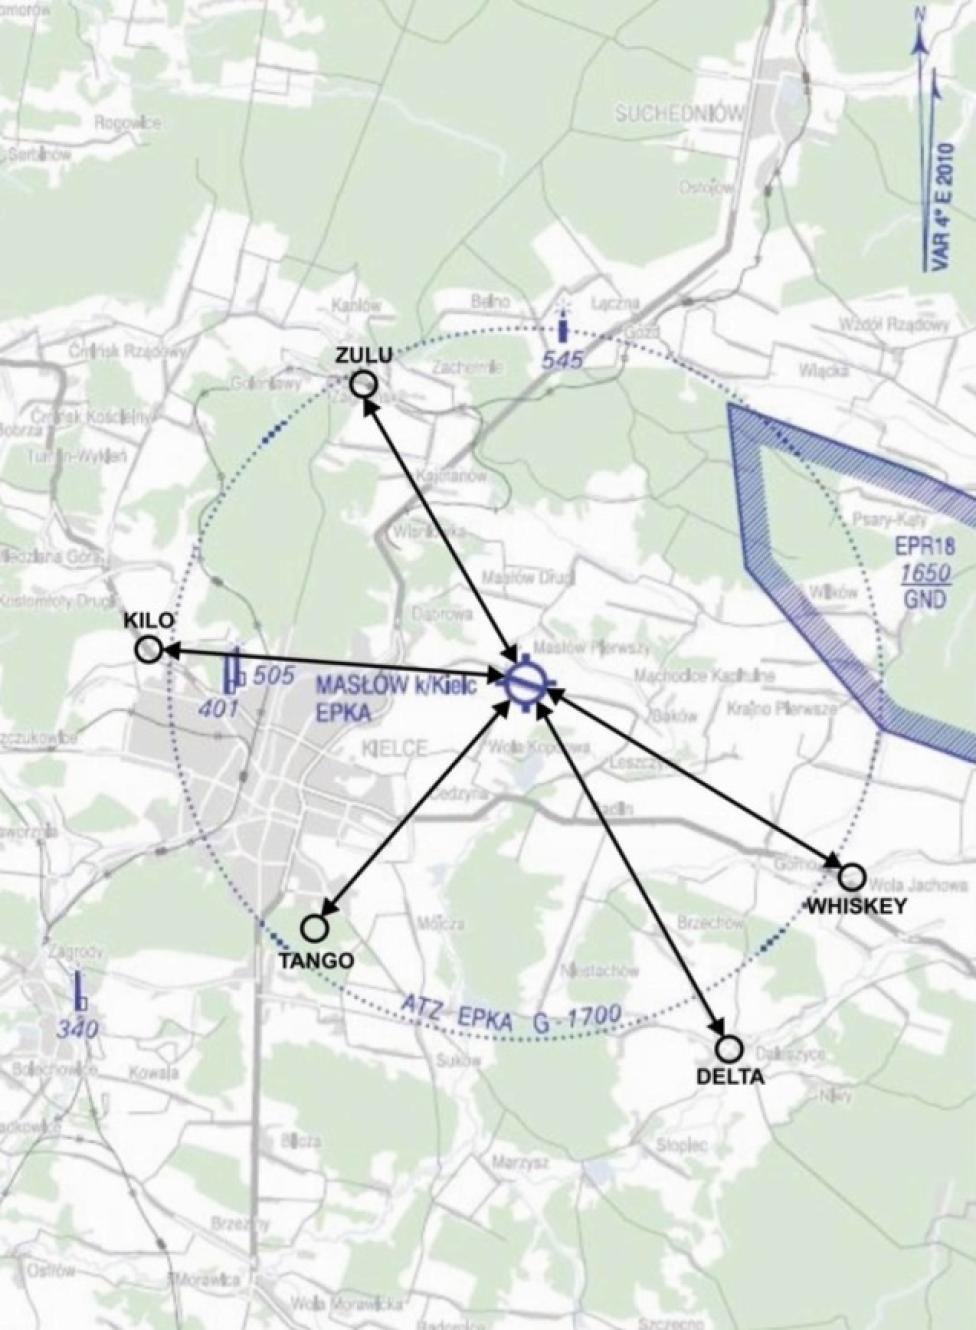 Punkty wlotowe VFR dla lotniska EPKA (fot. aeroklub.kielce.pl)